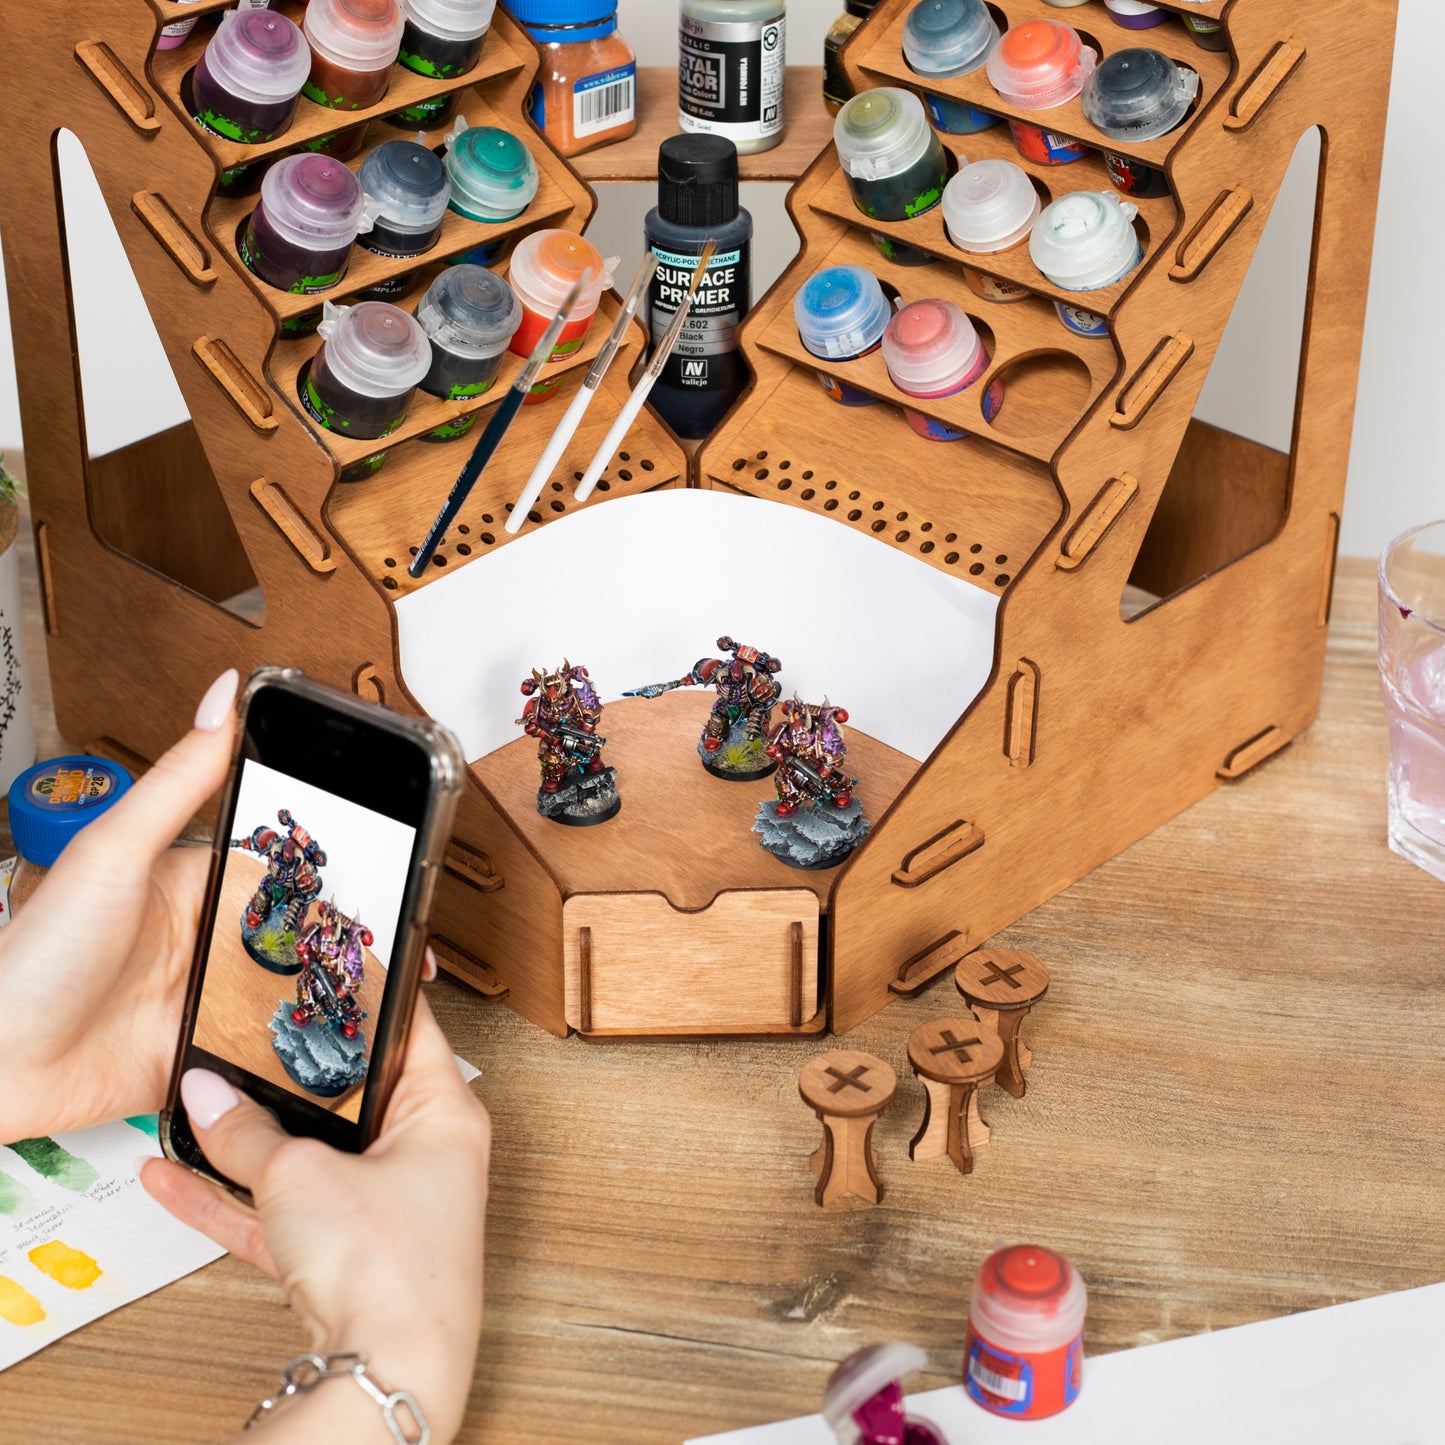 64 Pots Wooden Craft Paint Rack Miniatures Organizer Brush Paint